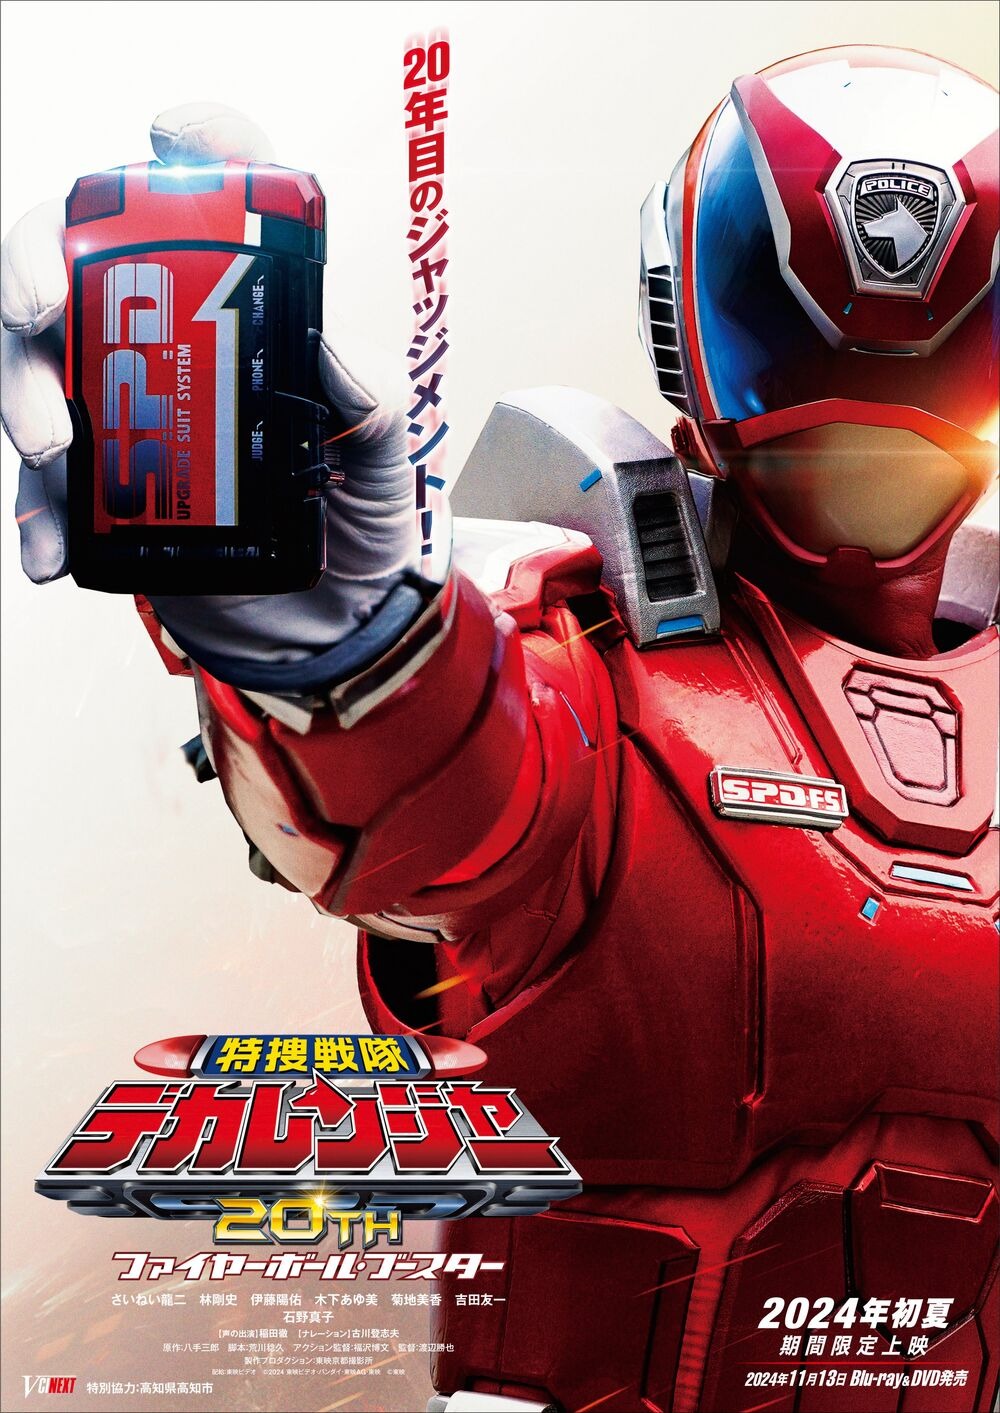 Extra Large Movie Poster Image for Tokusou Sentai Dekaranger 20th: Fireball Booster 